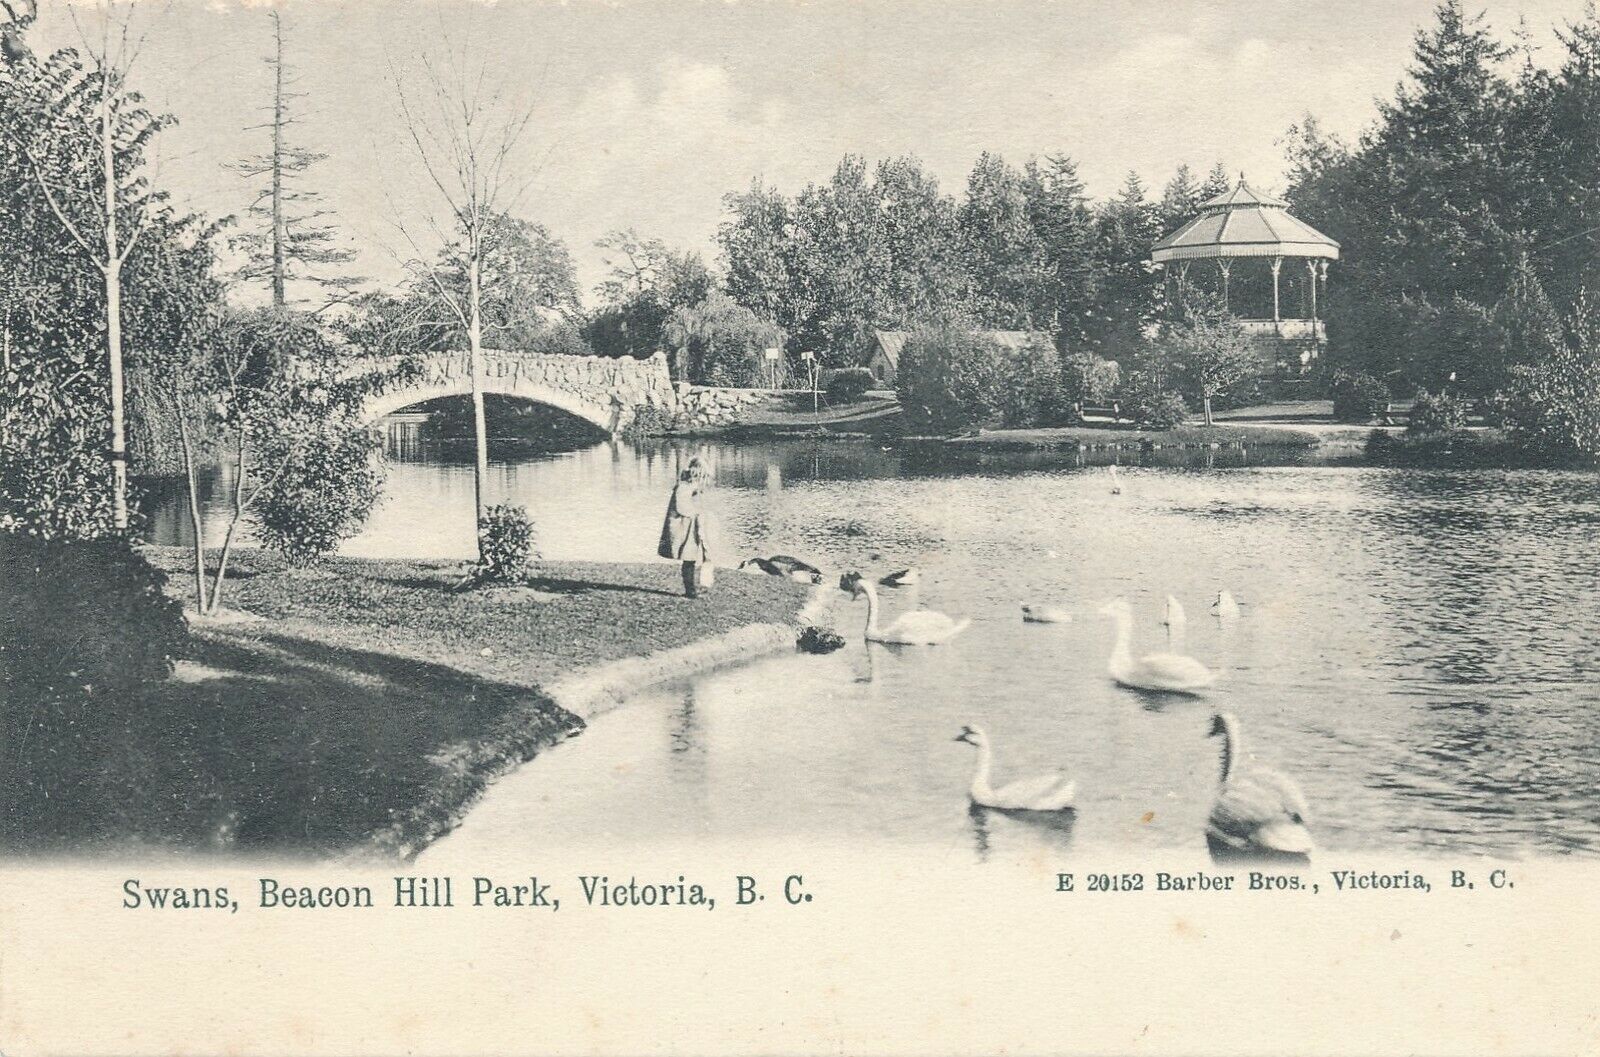 VICTORIA BC – Beacon Hill Park Swans - udb (pre 1908)